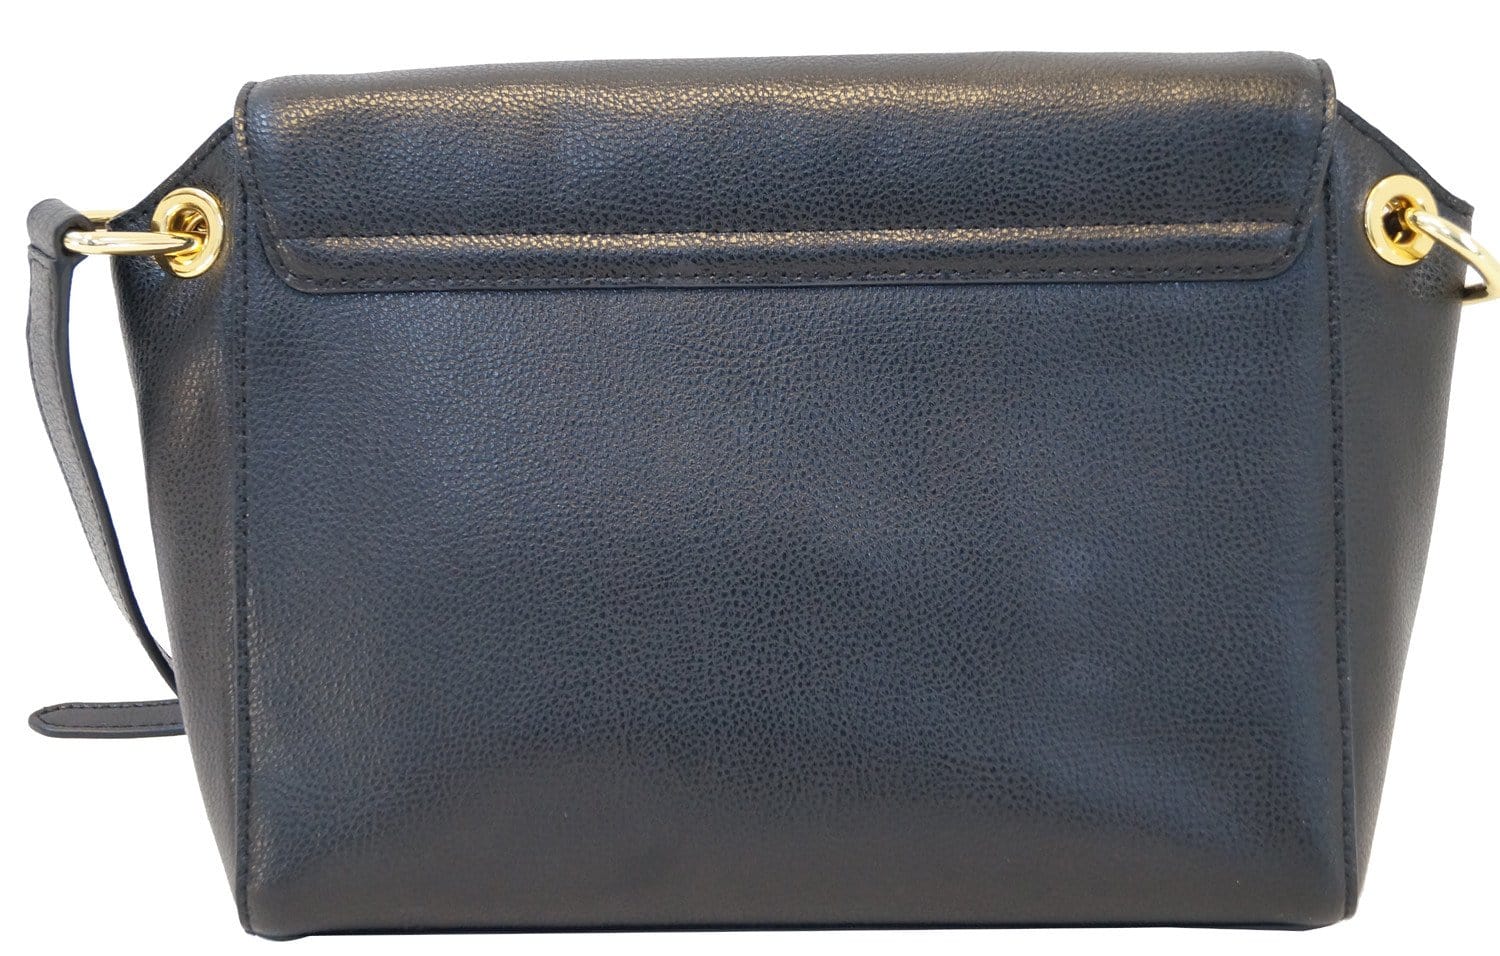 Ralph Lauren Black Leather Crossbody Bag TT624 - Sale